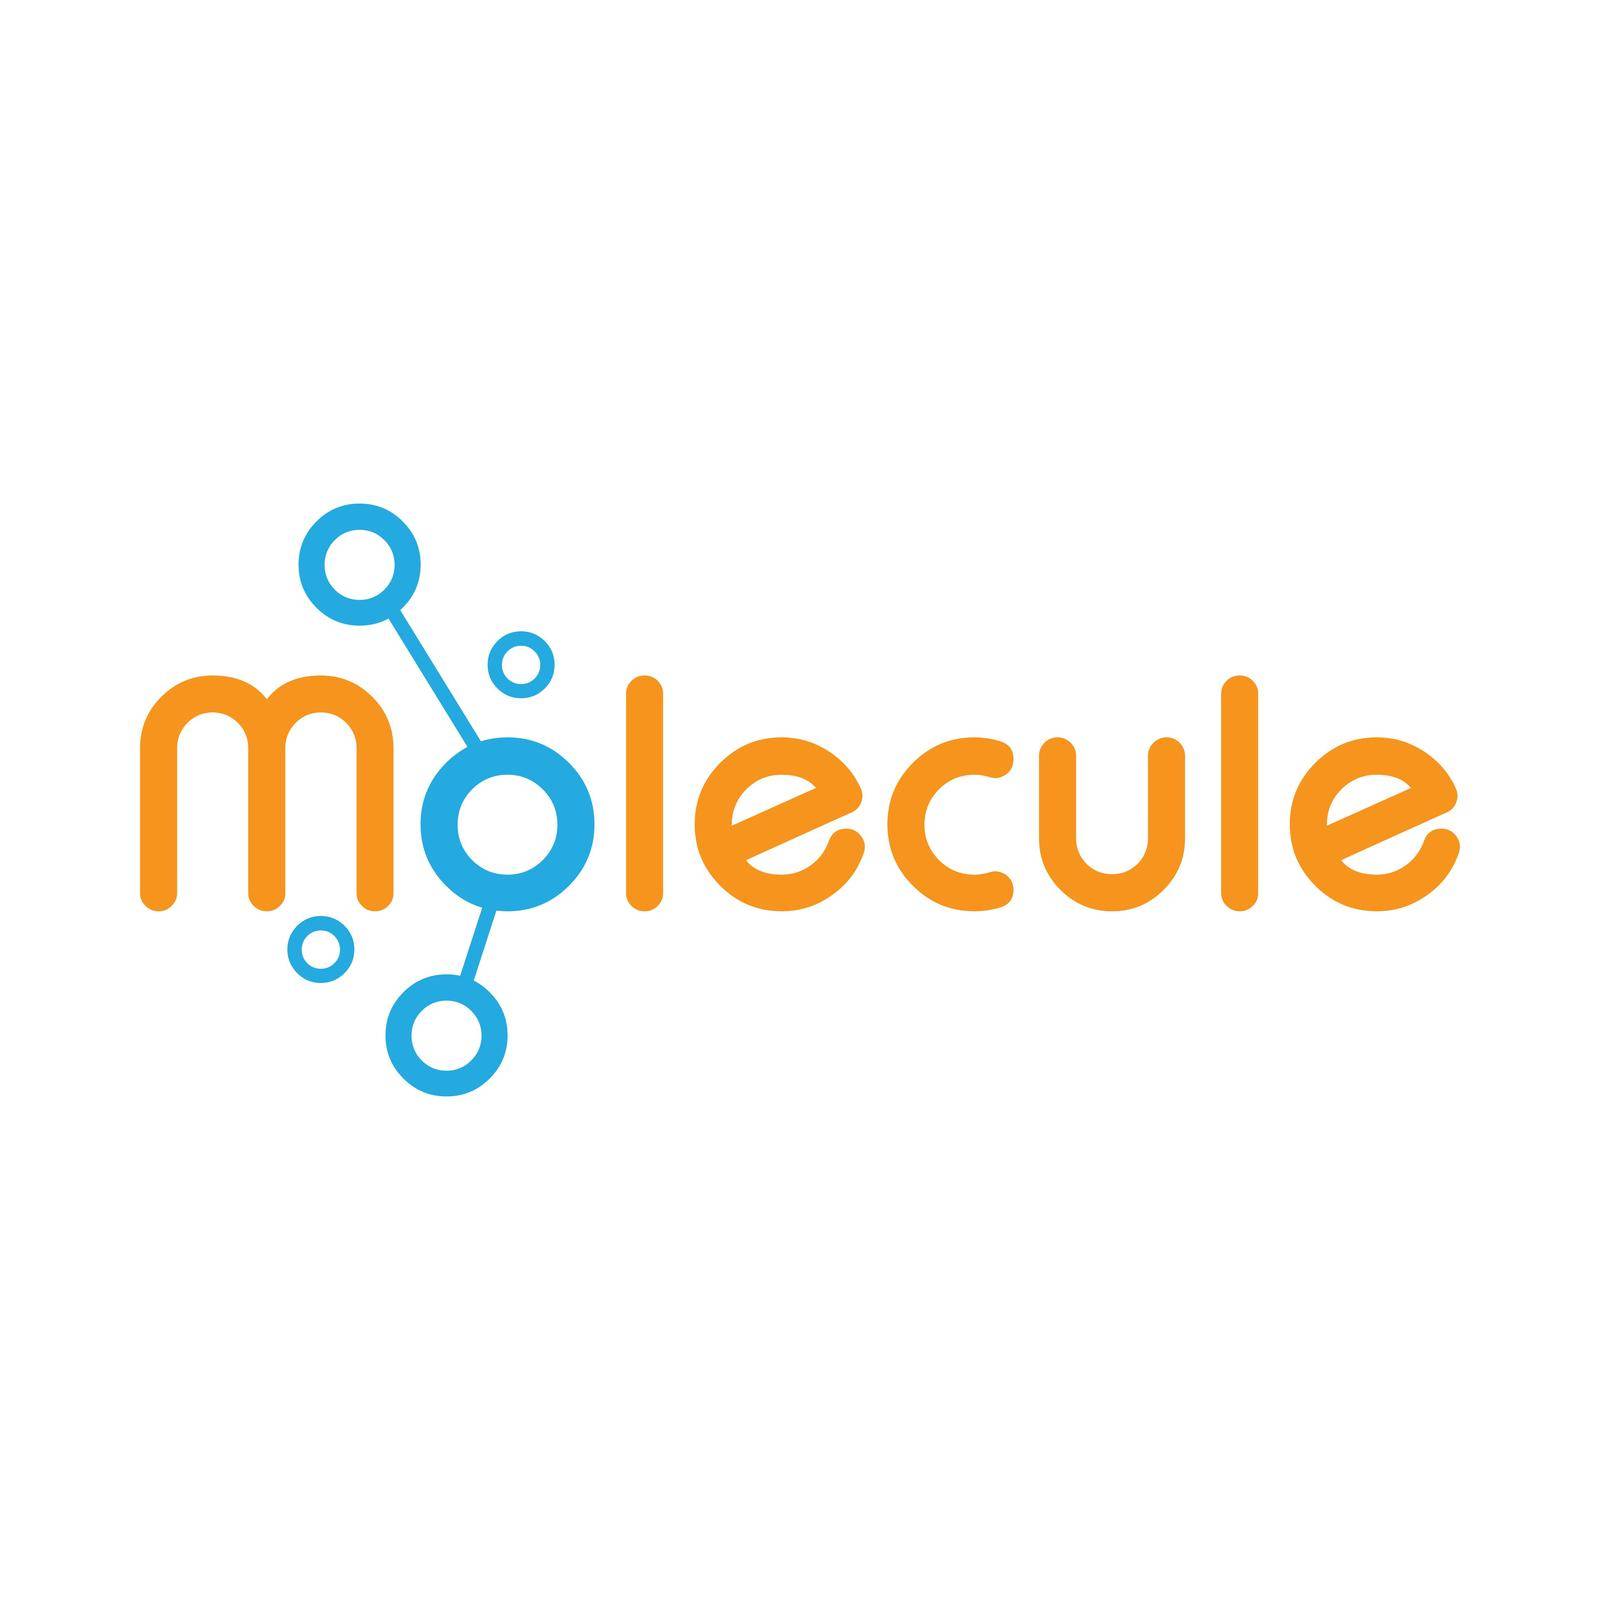 Molecule logo illustration by awk